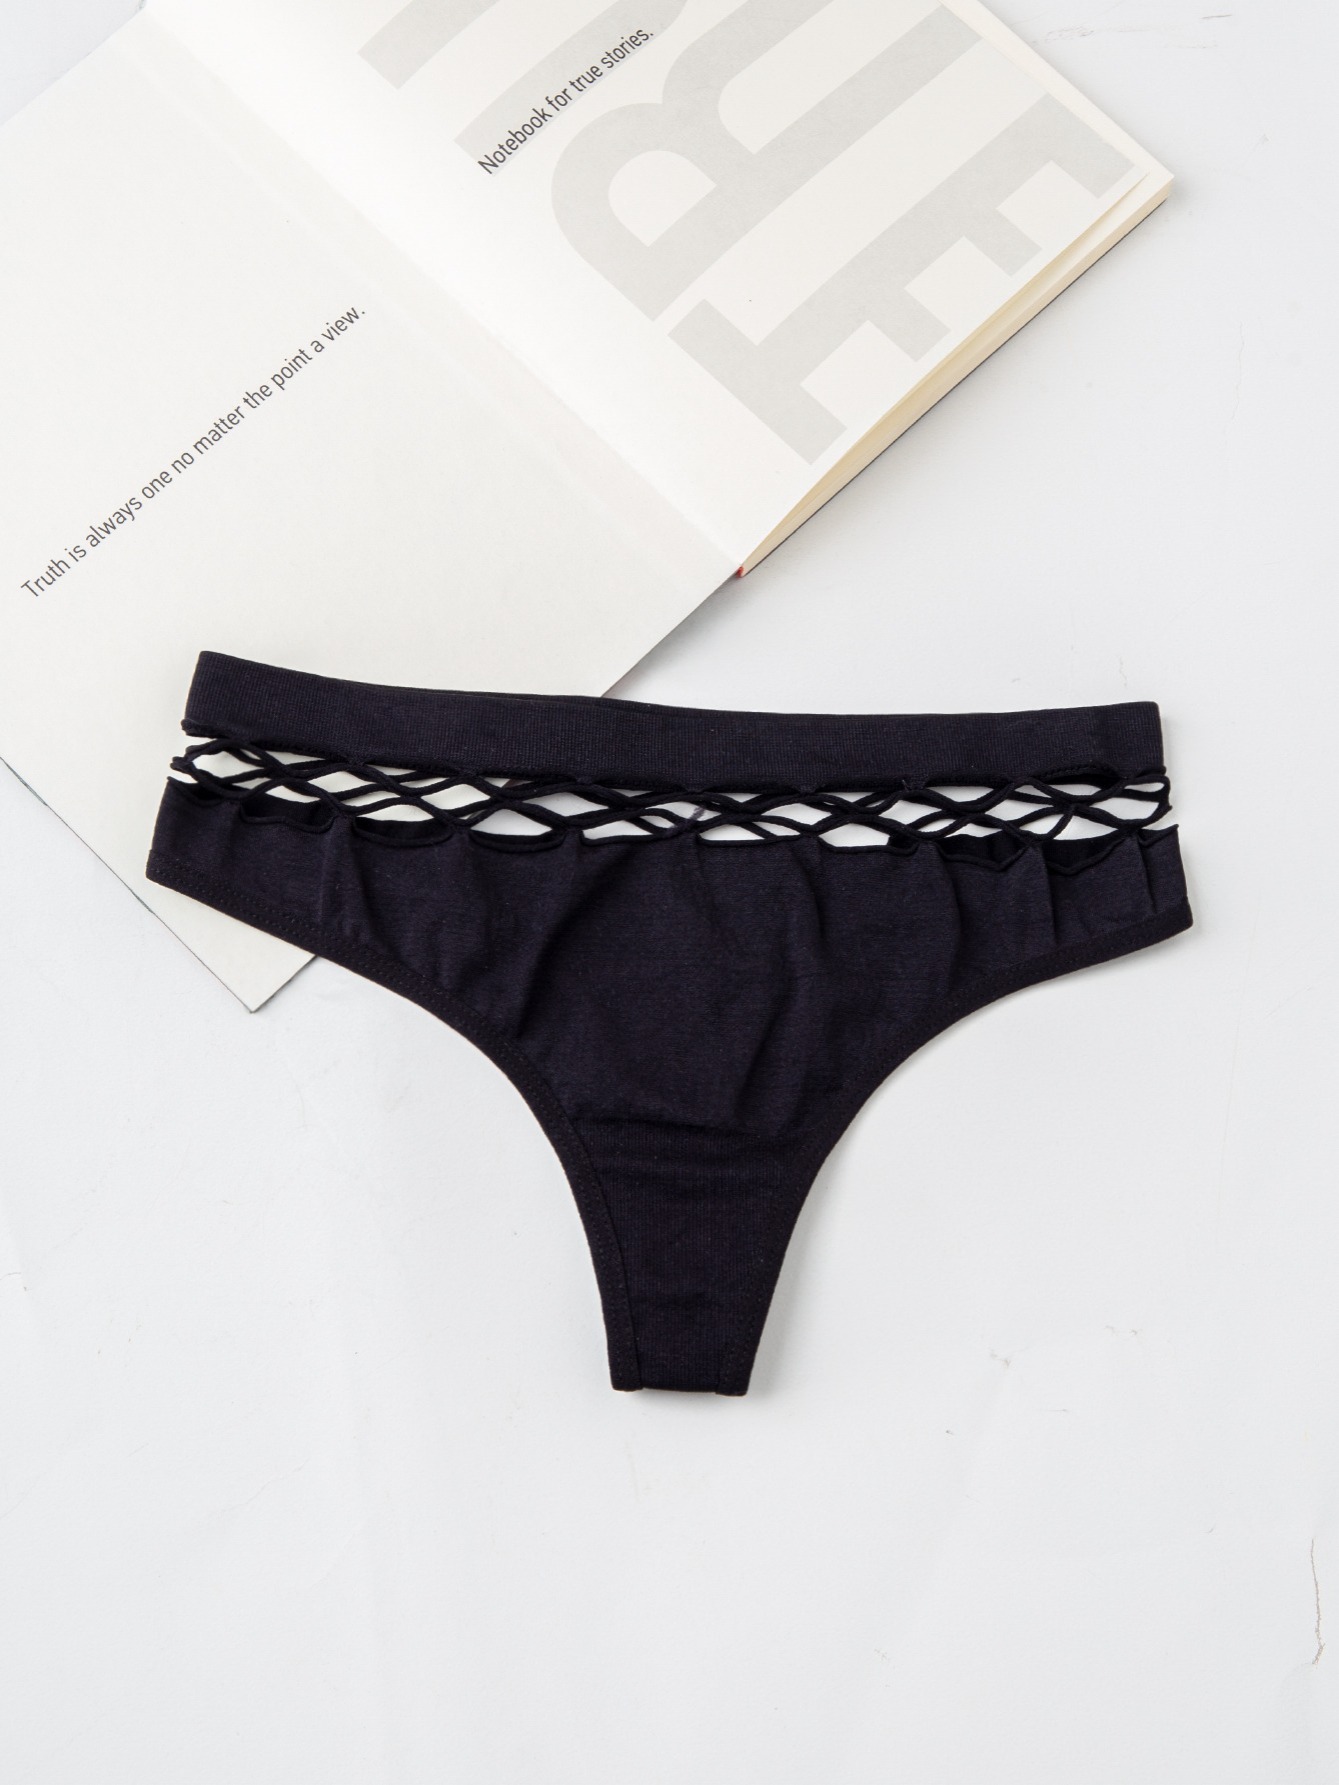 Women's Seamless Underwear (7pcs Triangle Panties)